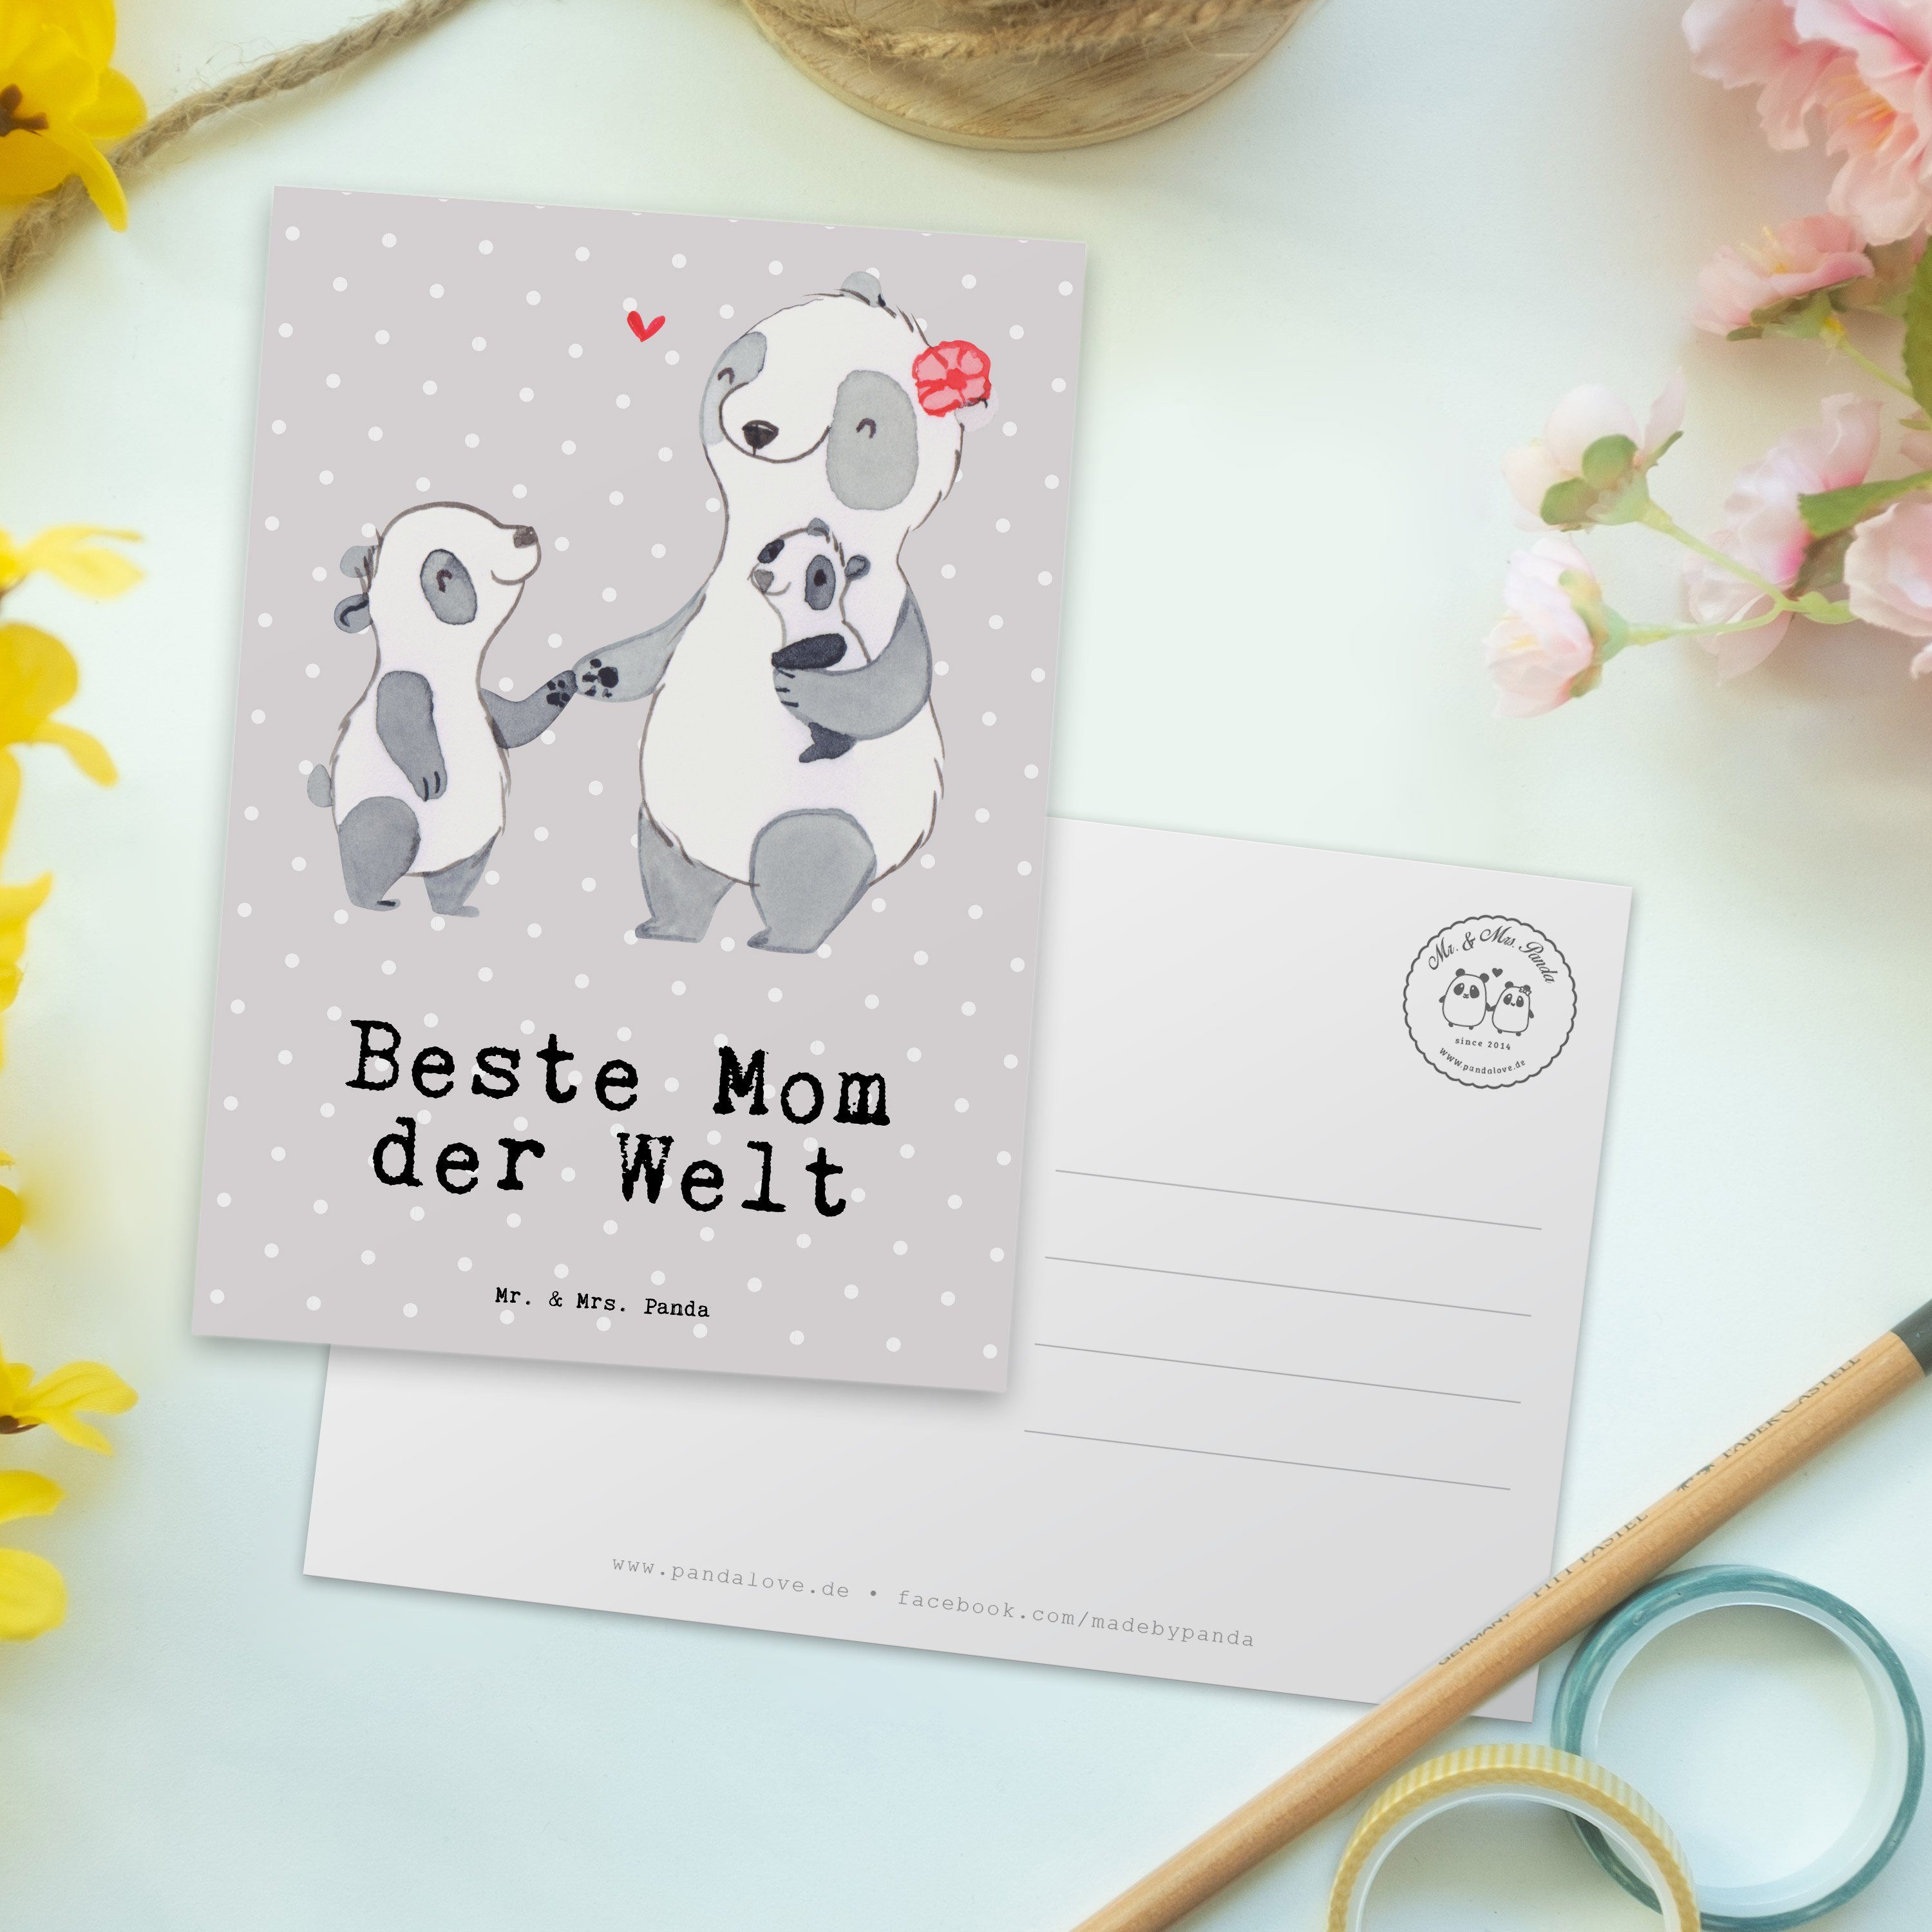 & Gesc Mom - Karte, Mr. Welt Panda Beste Sohn, Mrs. - der Panda Geschenk, Postkarte Grau Pastell